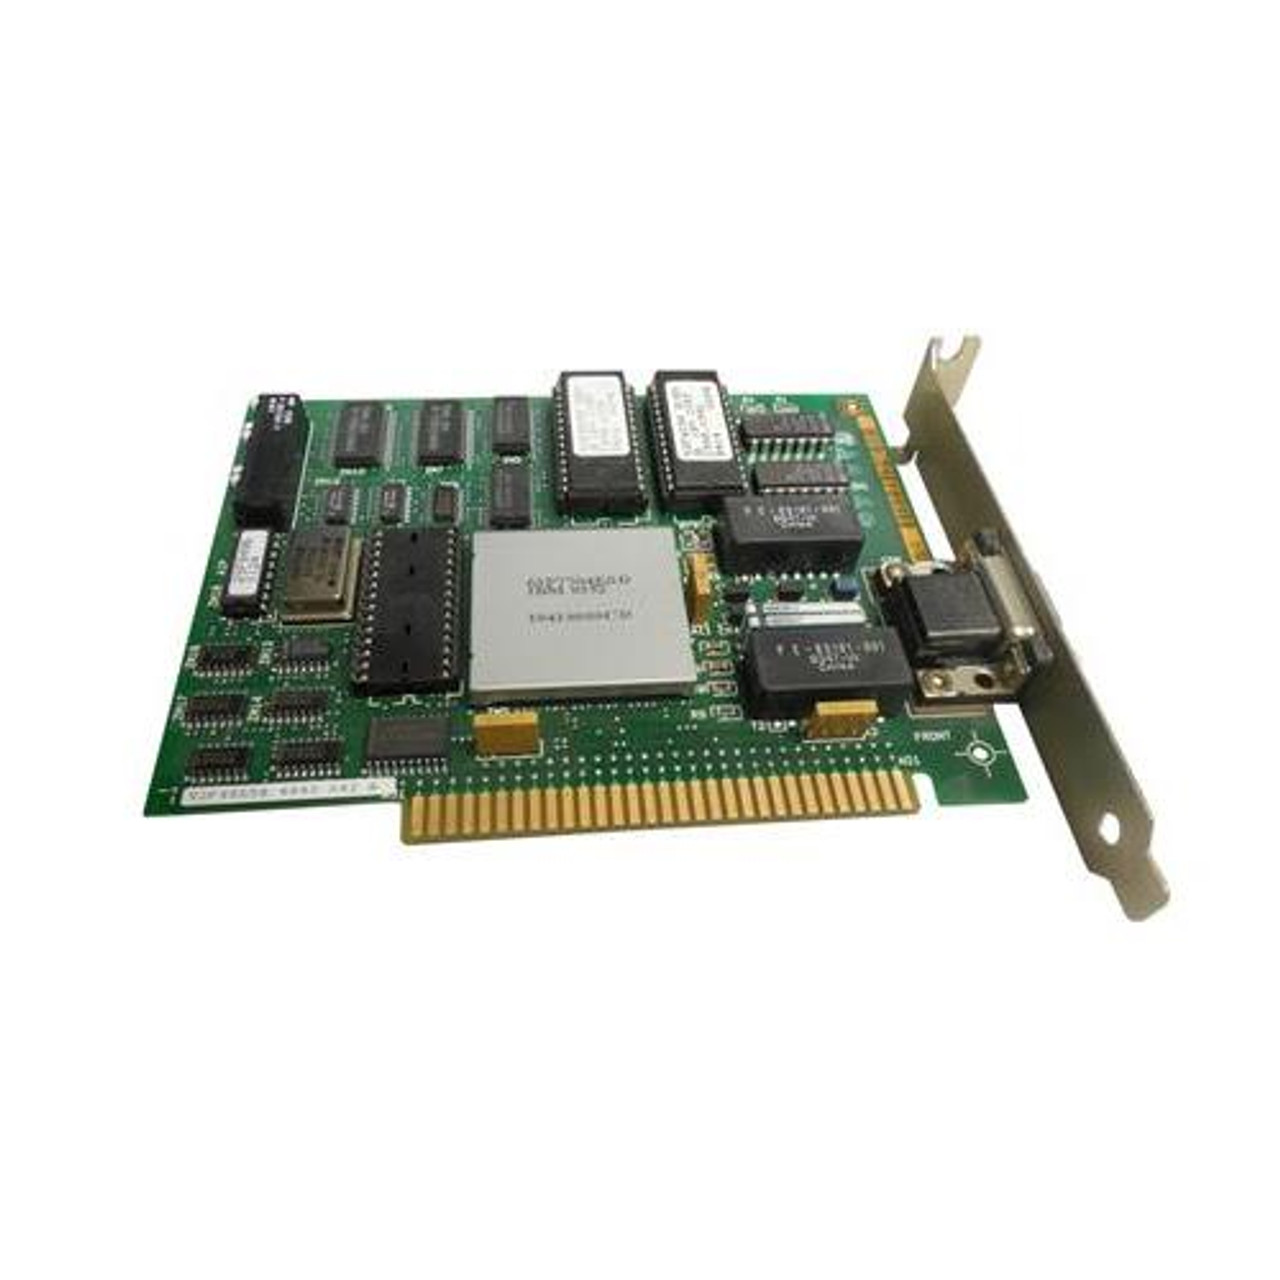 92G8457 IBM 16/4 Token Ring Auto PCI LANstreamer Adapter